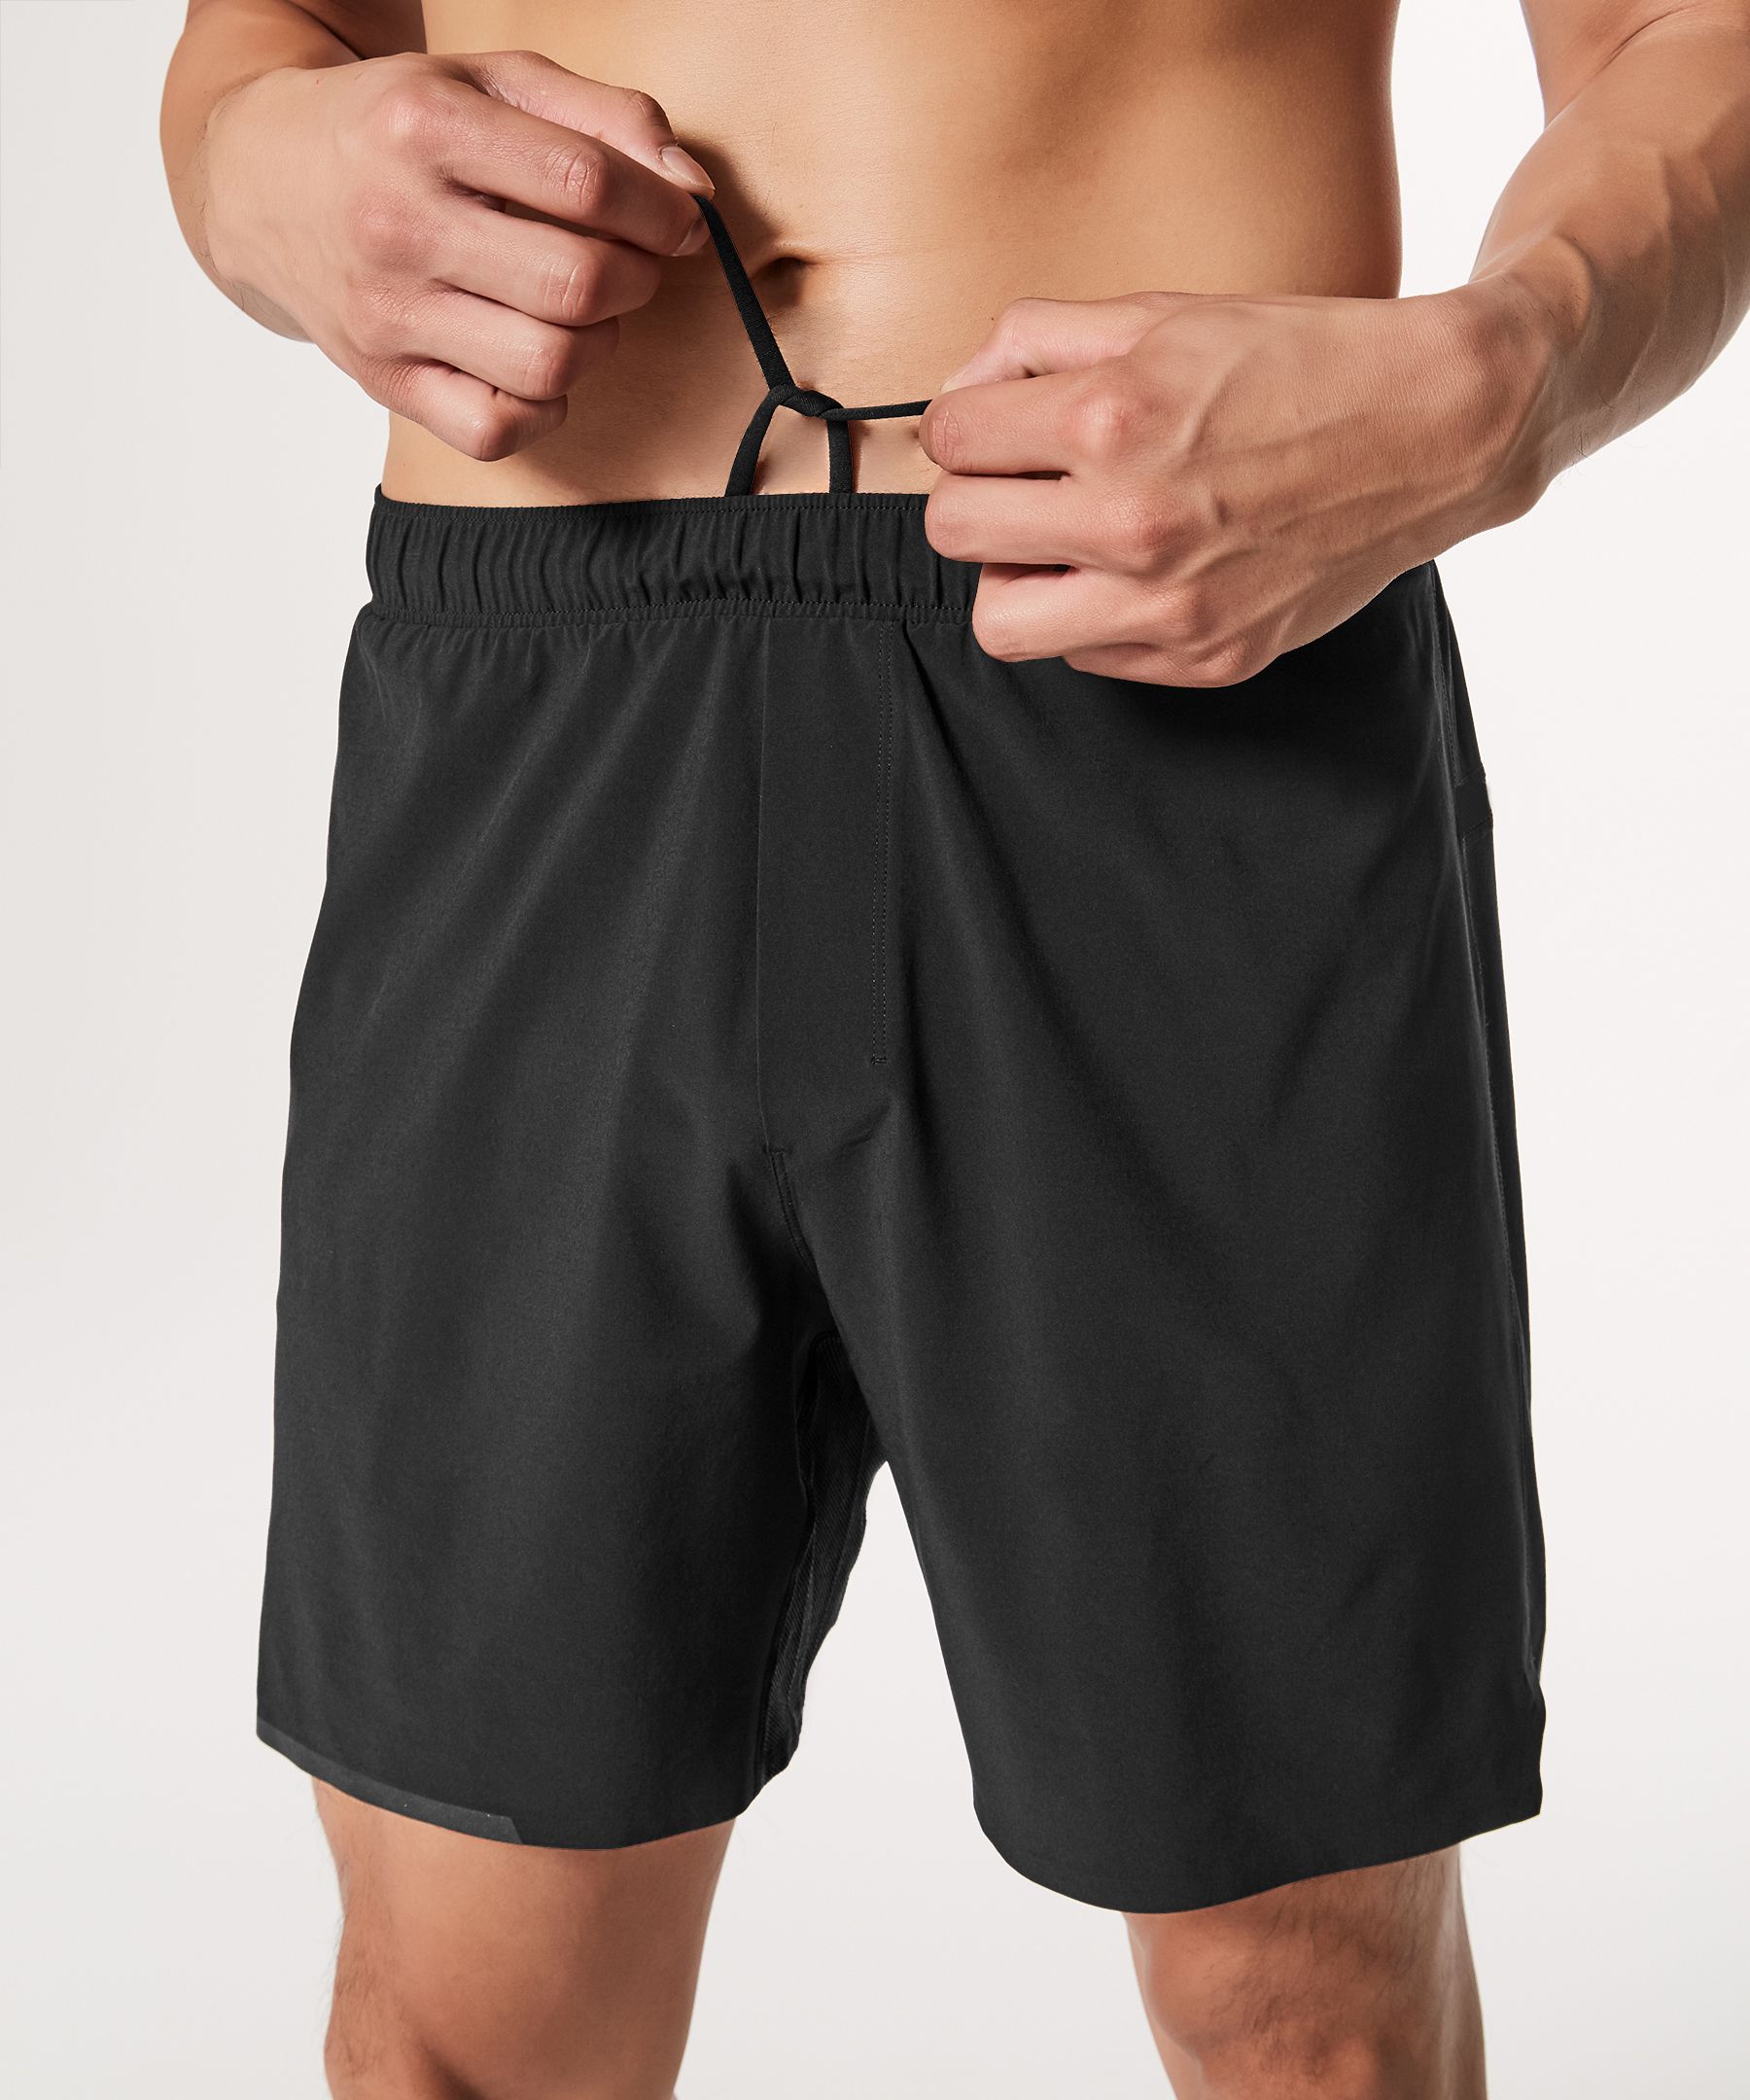 lululemon men's workout shorts